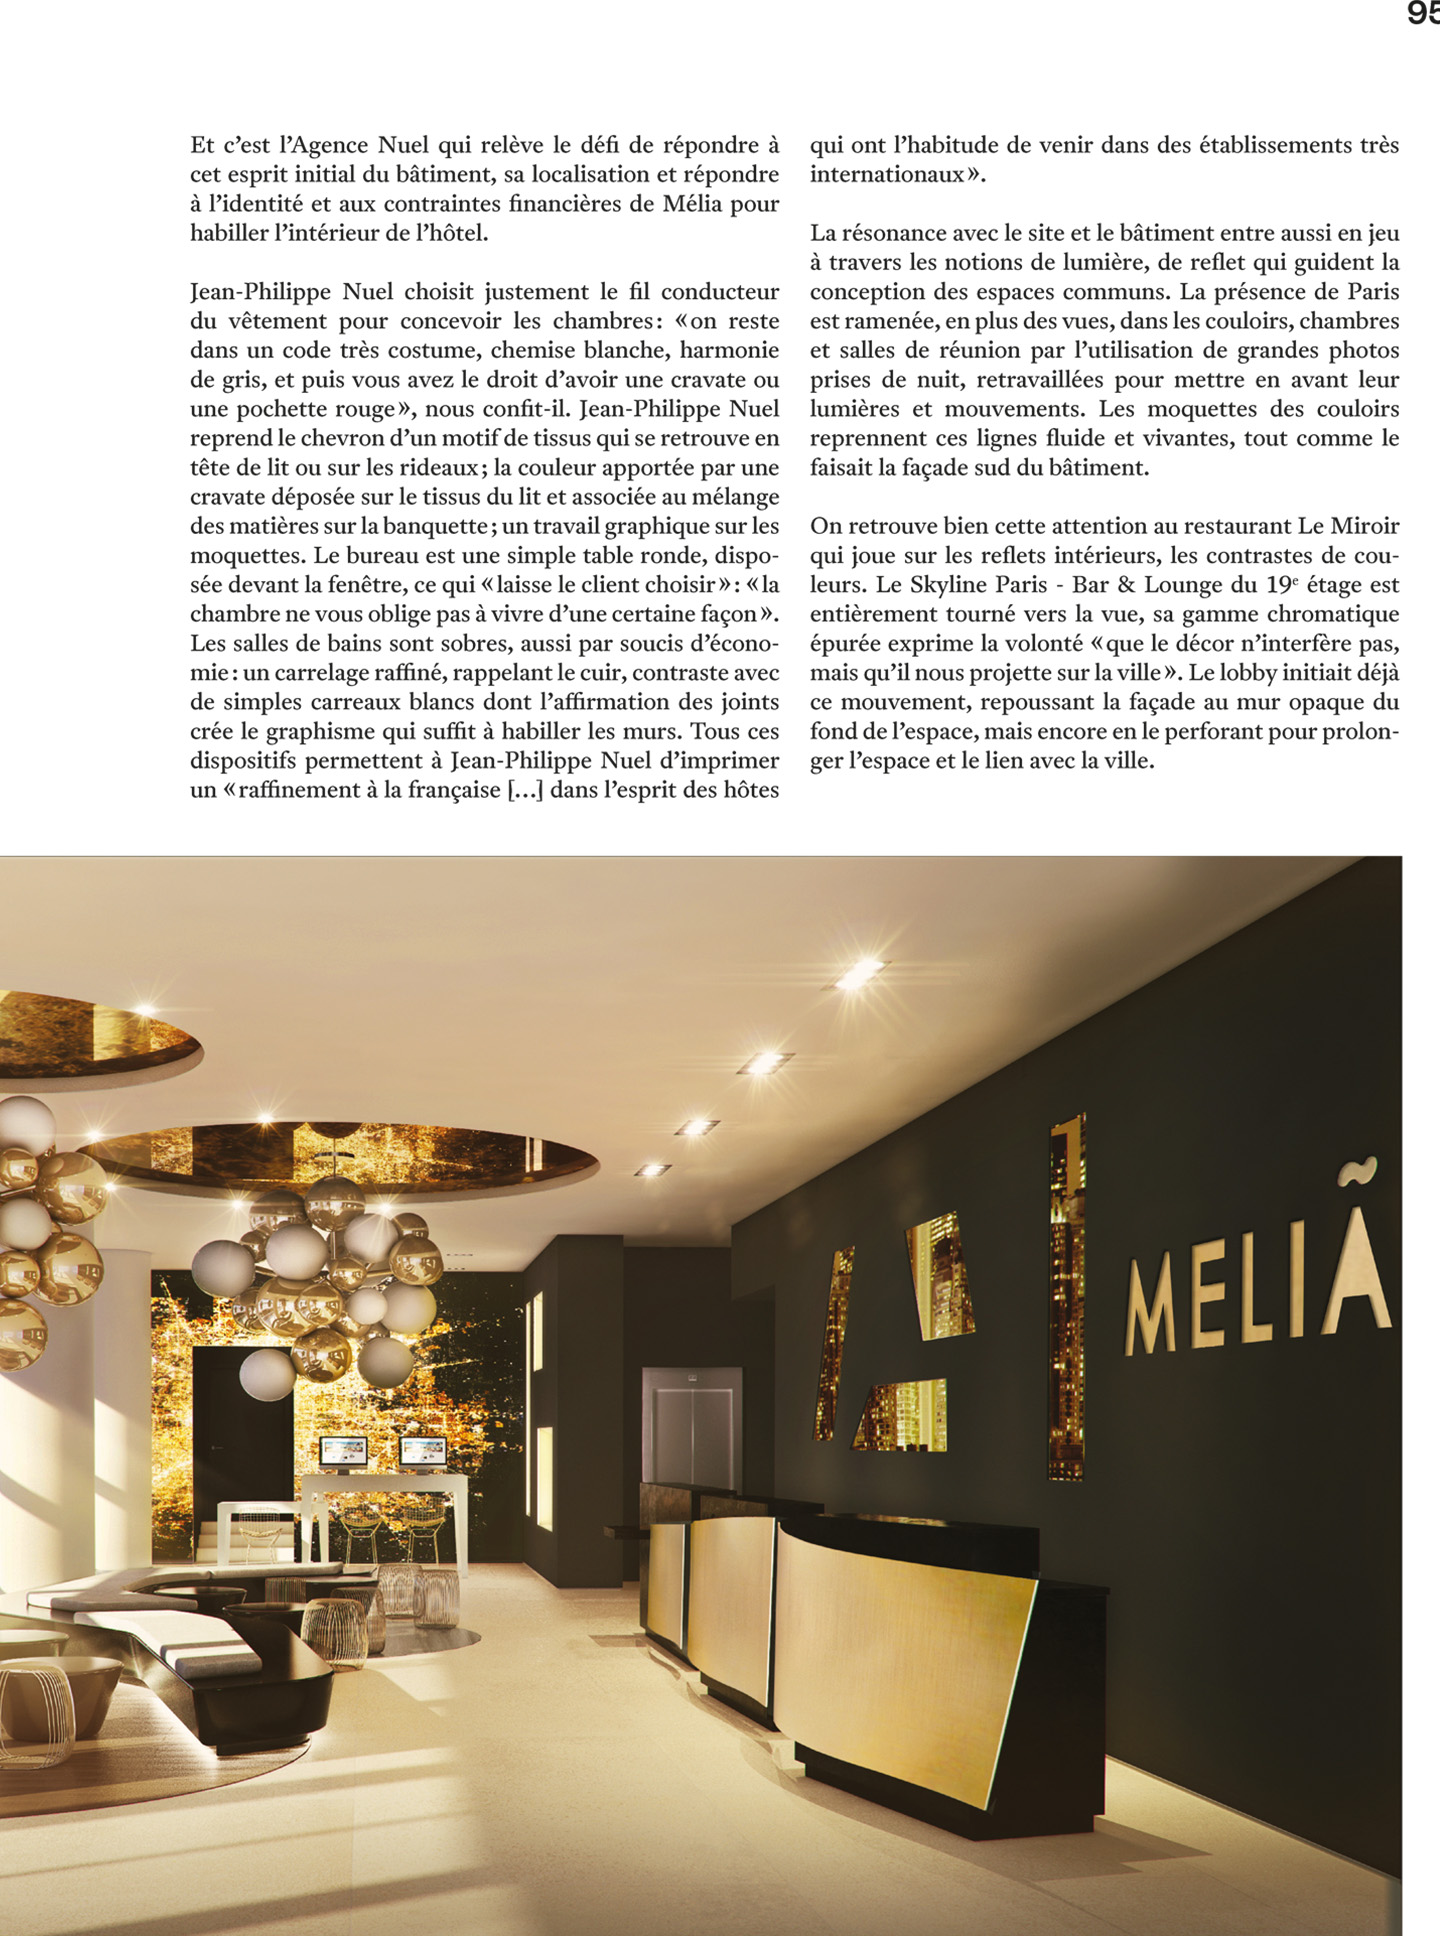 article on the Melia Paris La Défense, luxury hotel in Paris designed by the interior design studio jean-philippe nuel, in the magazine archistorm